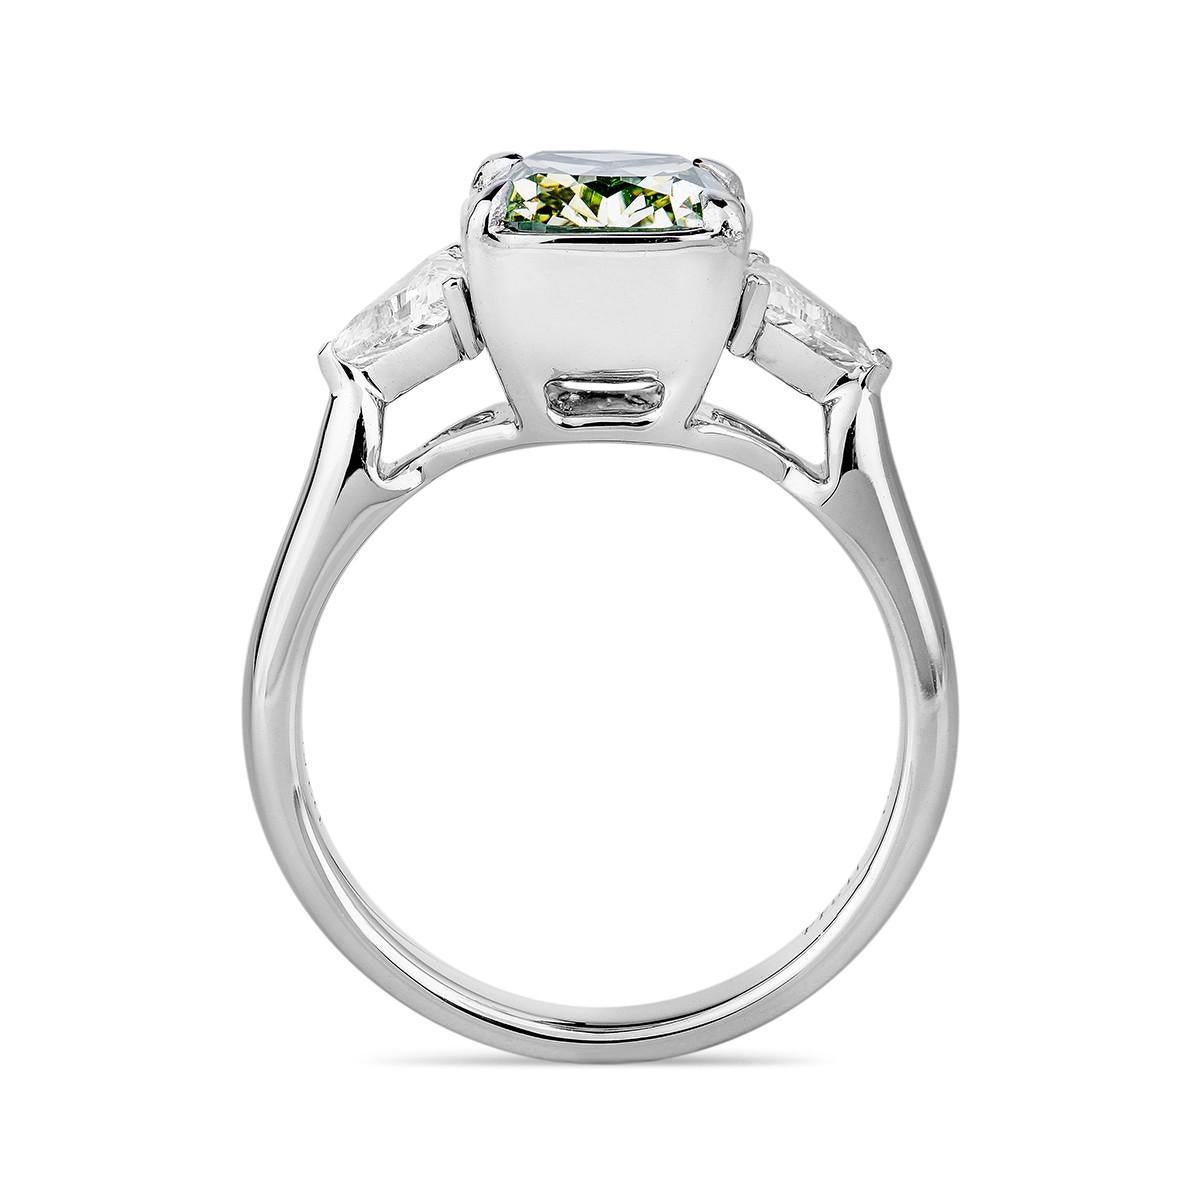 Modern GIA Certified White Gold Fancy Green Cushion Cut Diamond Ring, 2.97 Carat For Sale